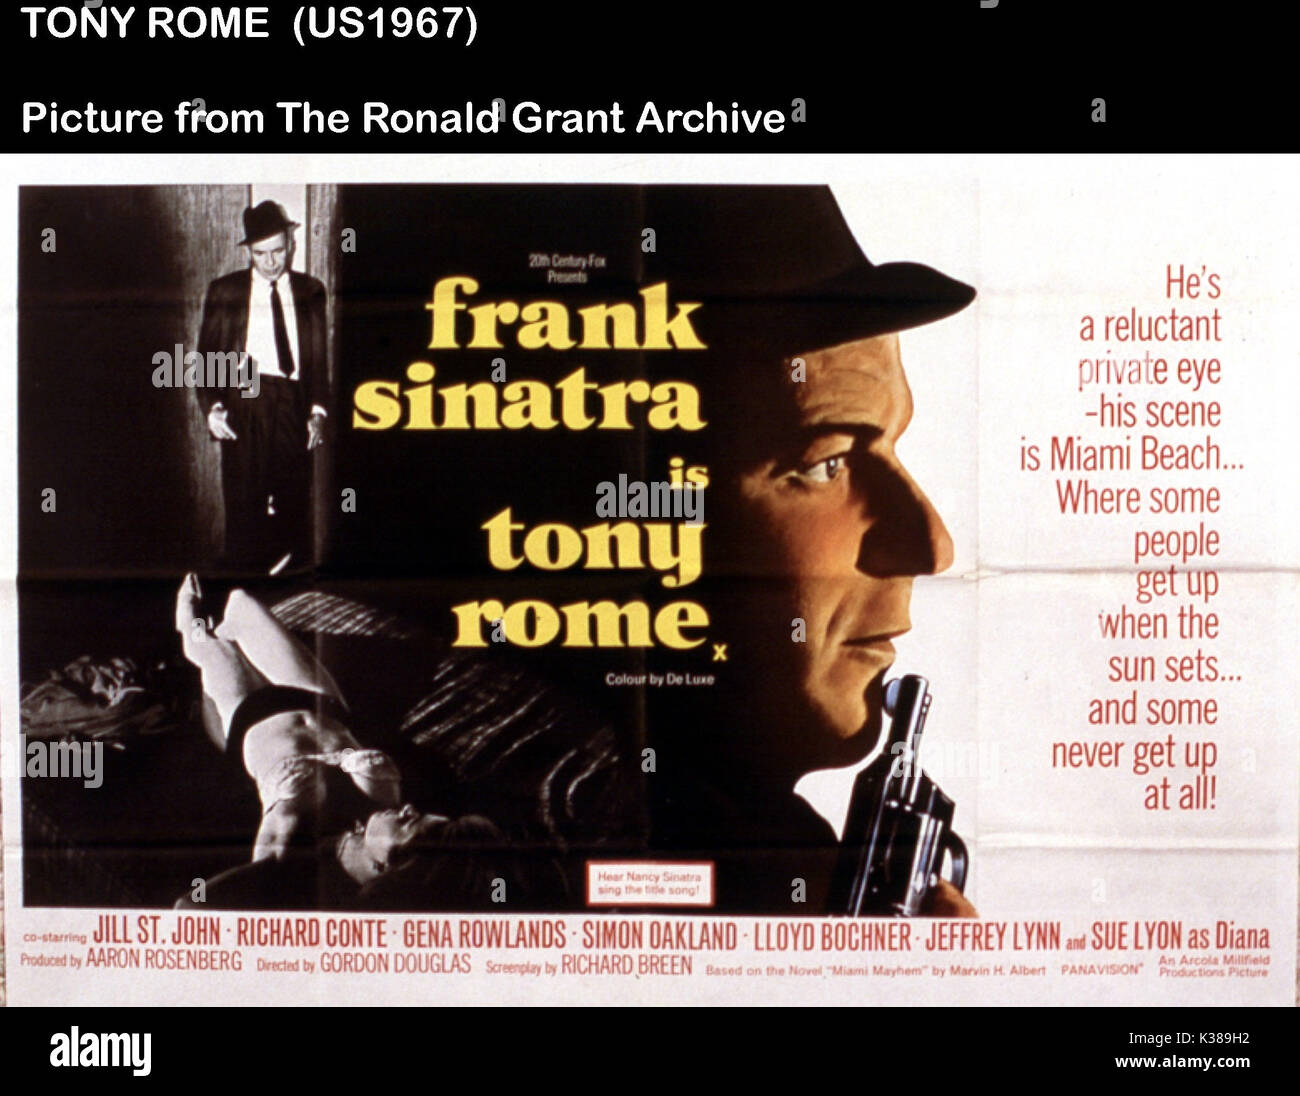 TONY ROME      Date: 1967 Stock Photo